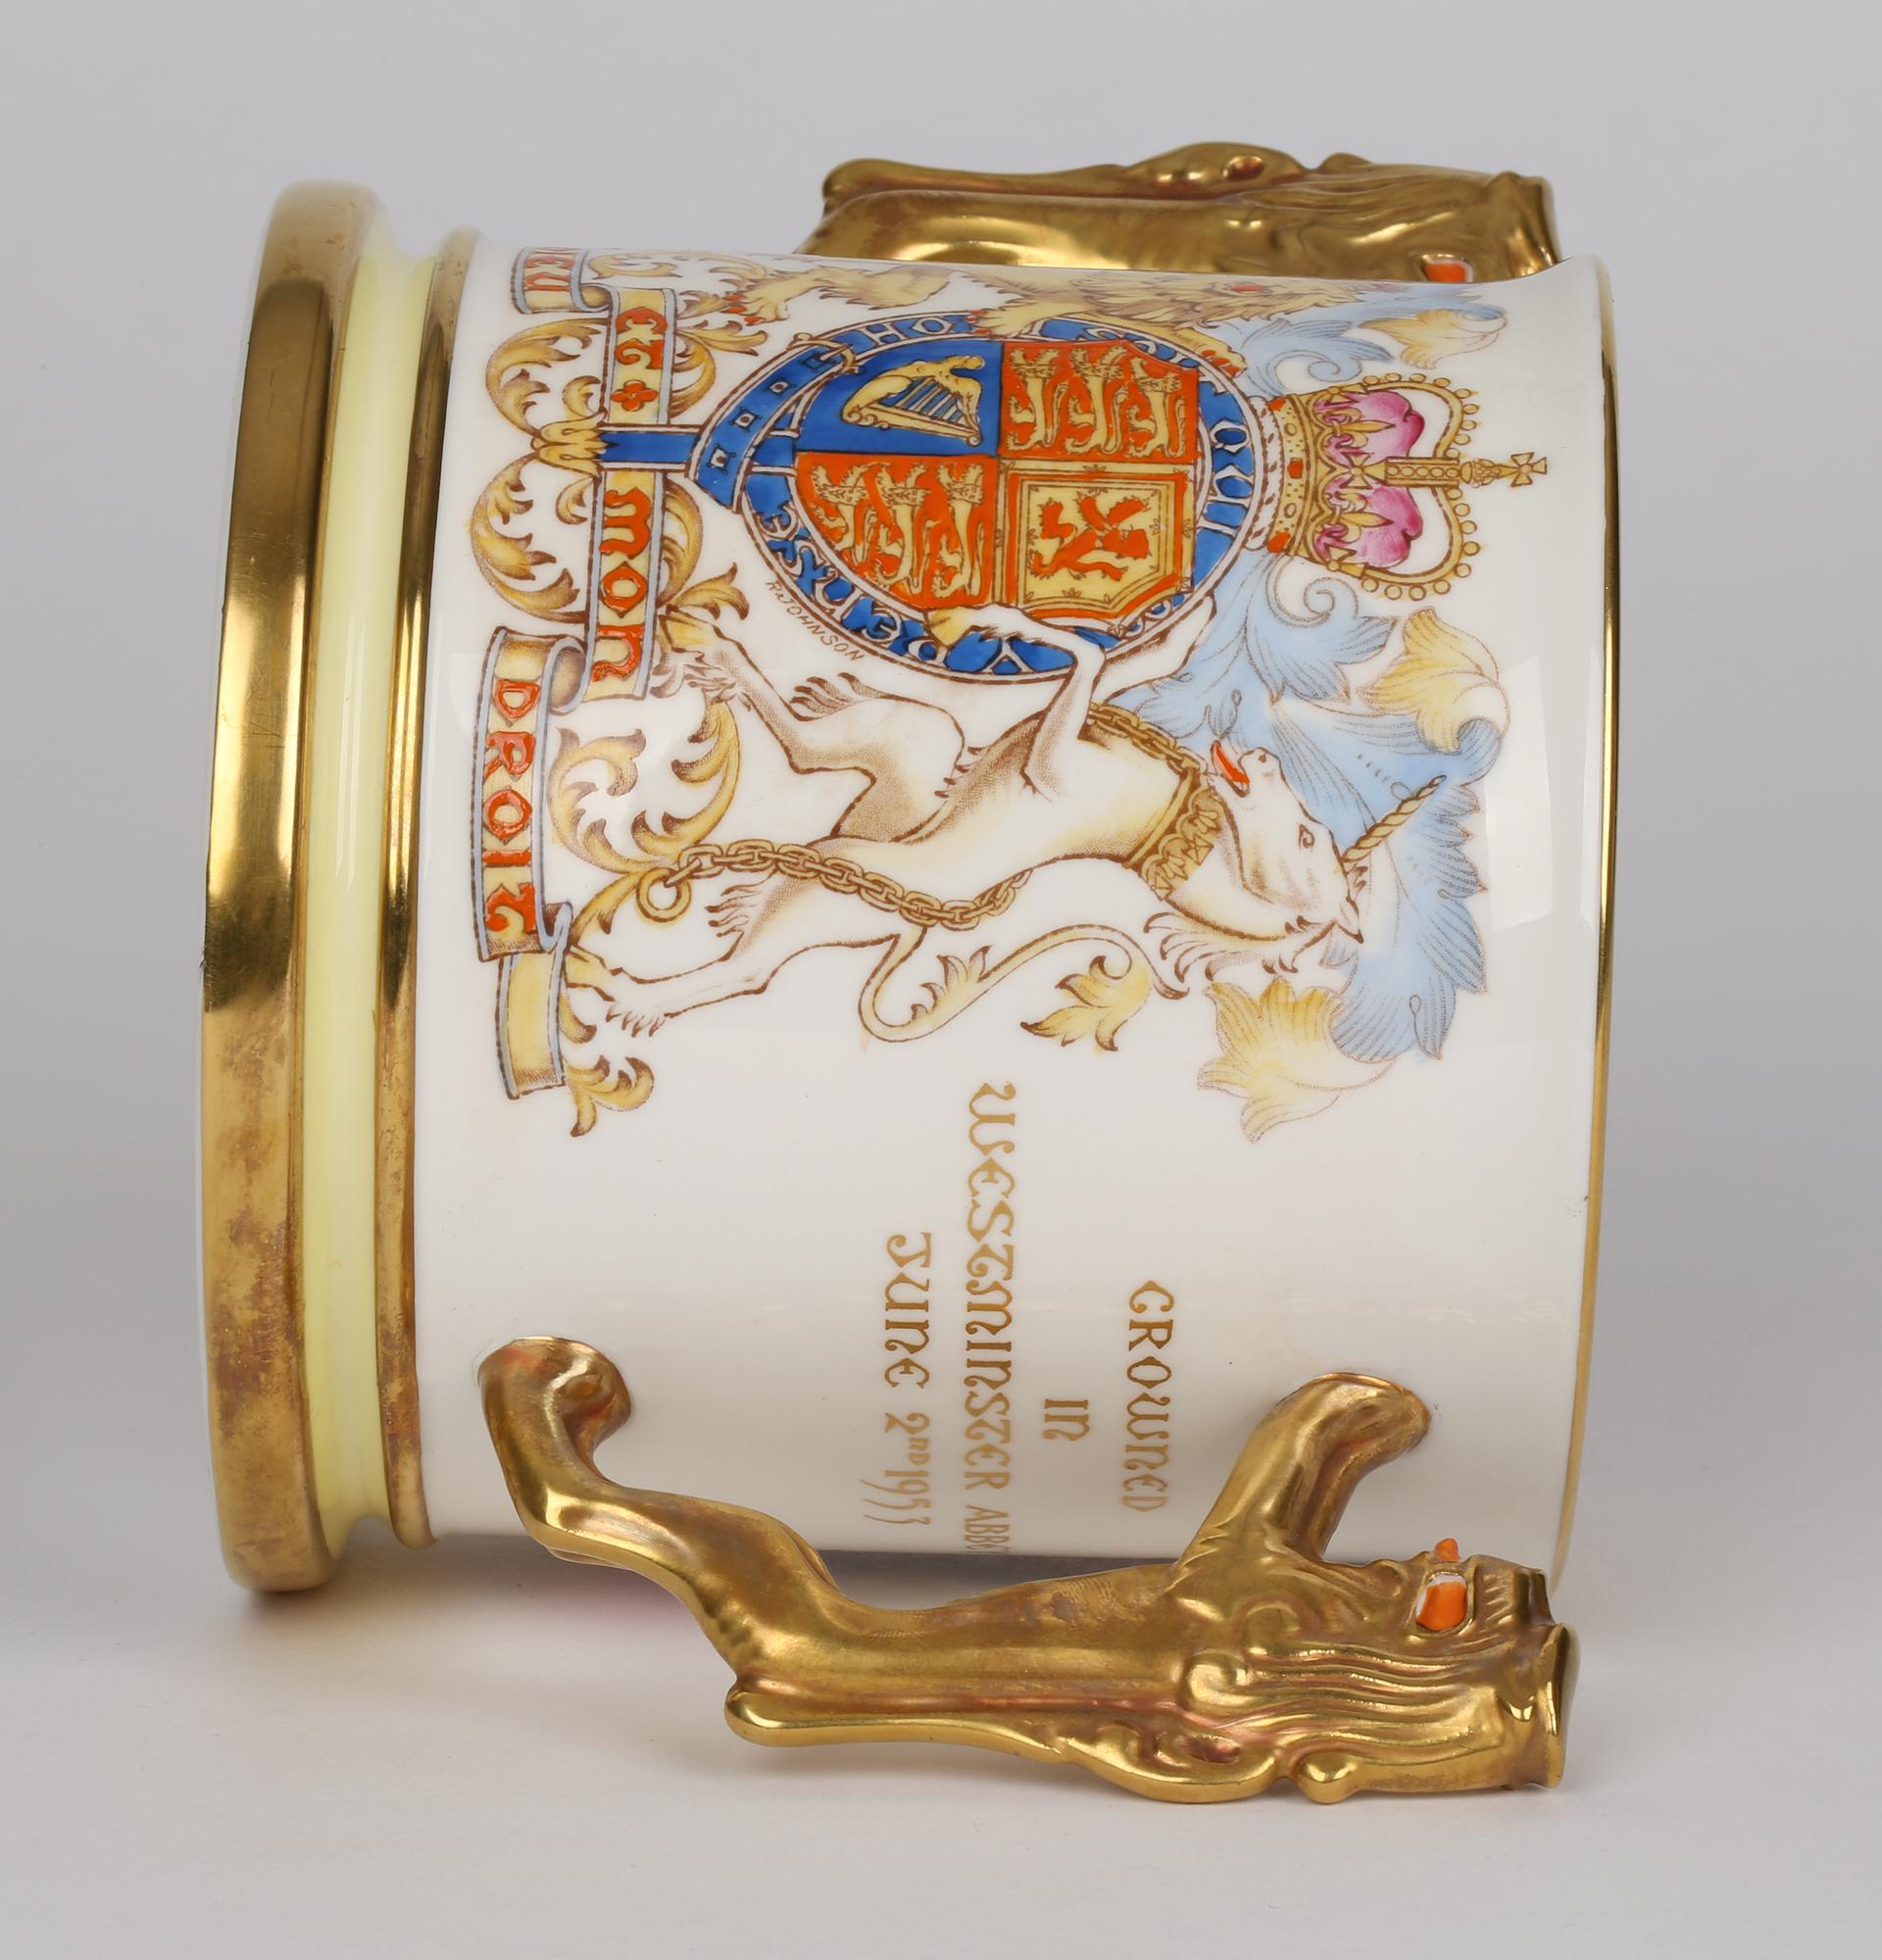 English Paragon Ltd Edn Porcelain Tyg Commemorating Coronation of Queen Elizabeth II 195